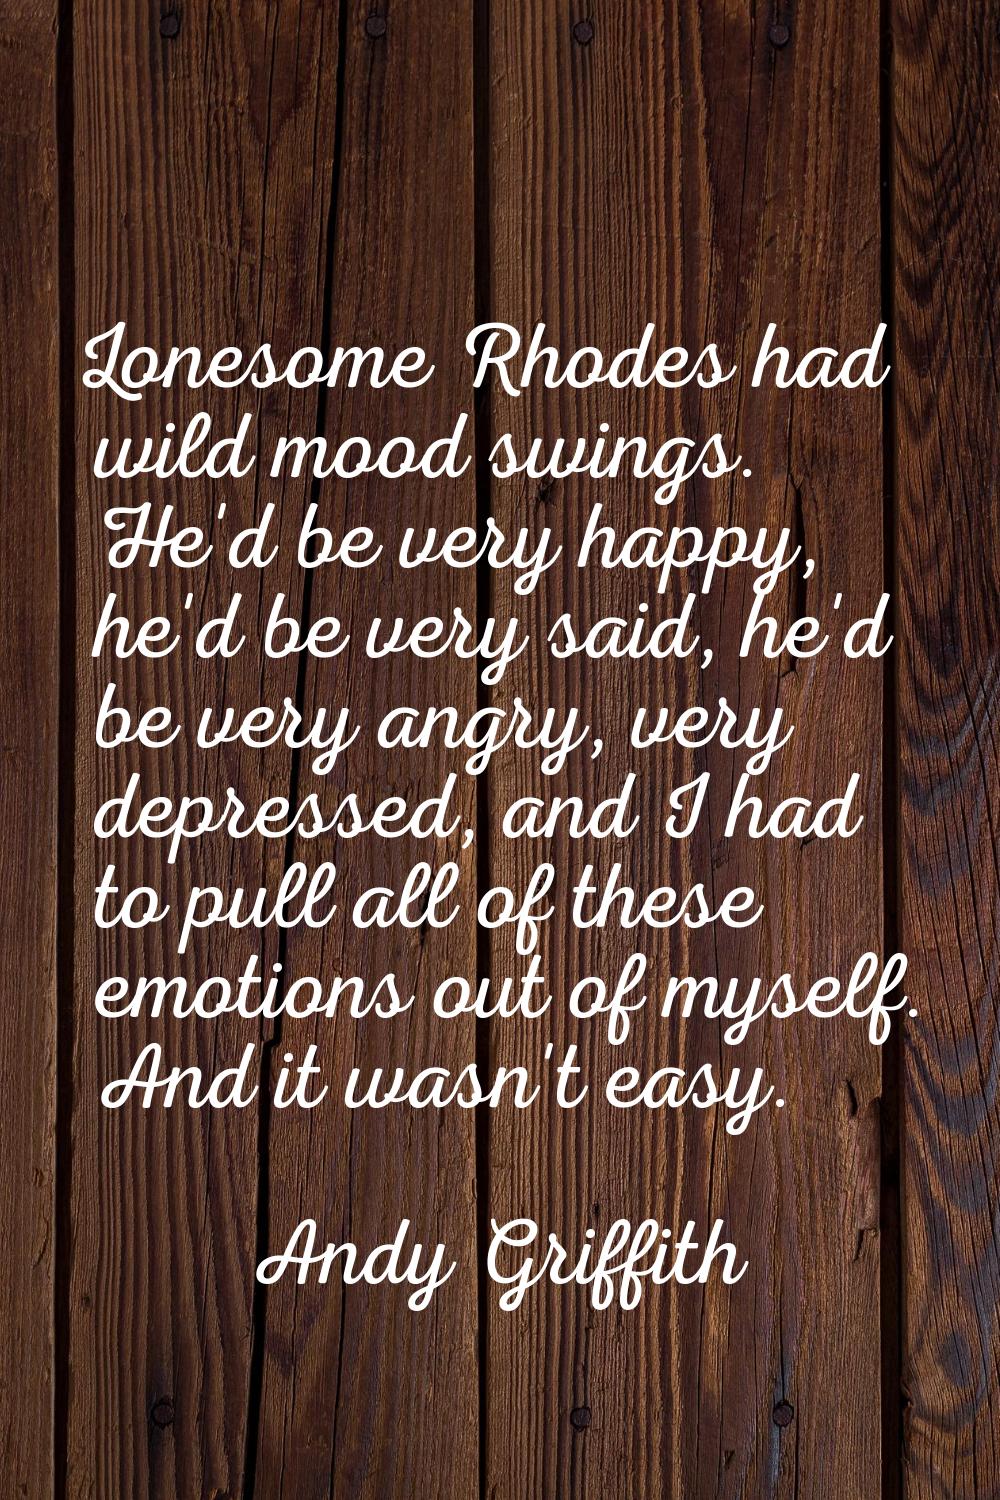 Lonesome Rhodes had wild mood swings. He'd be very happy, he'd be very said, he'd be very angry, ve